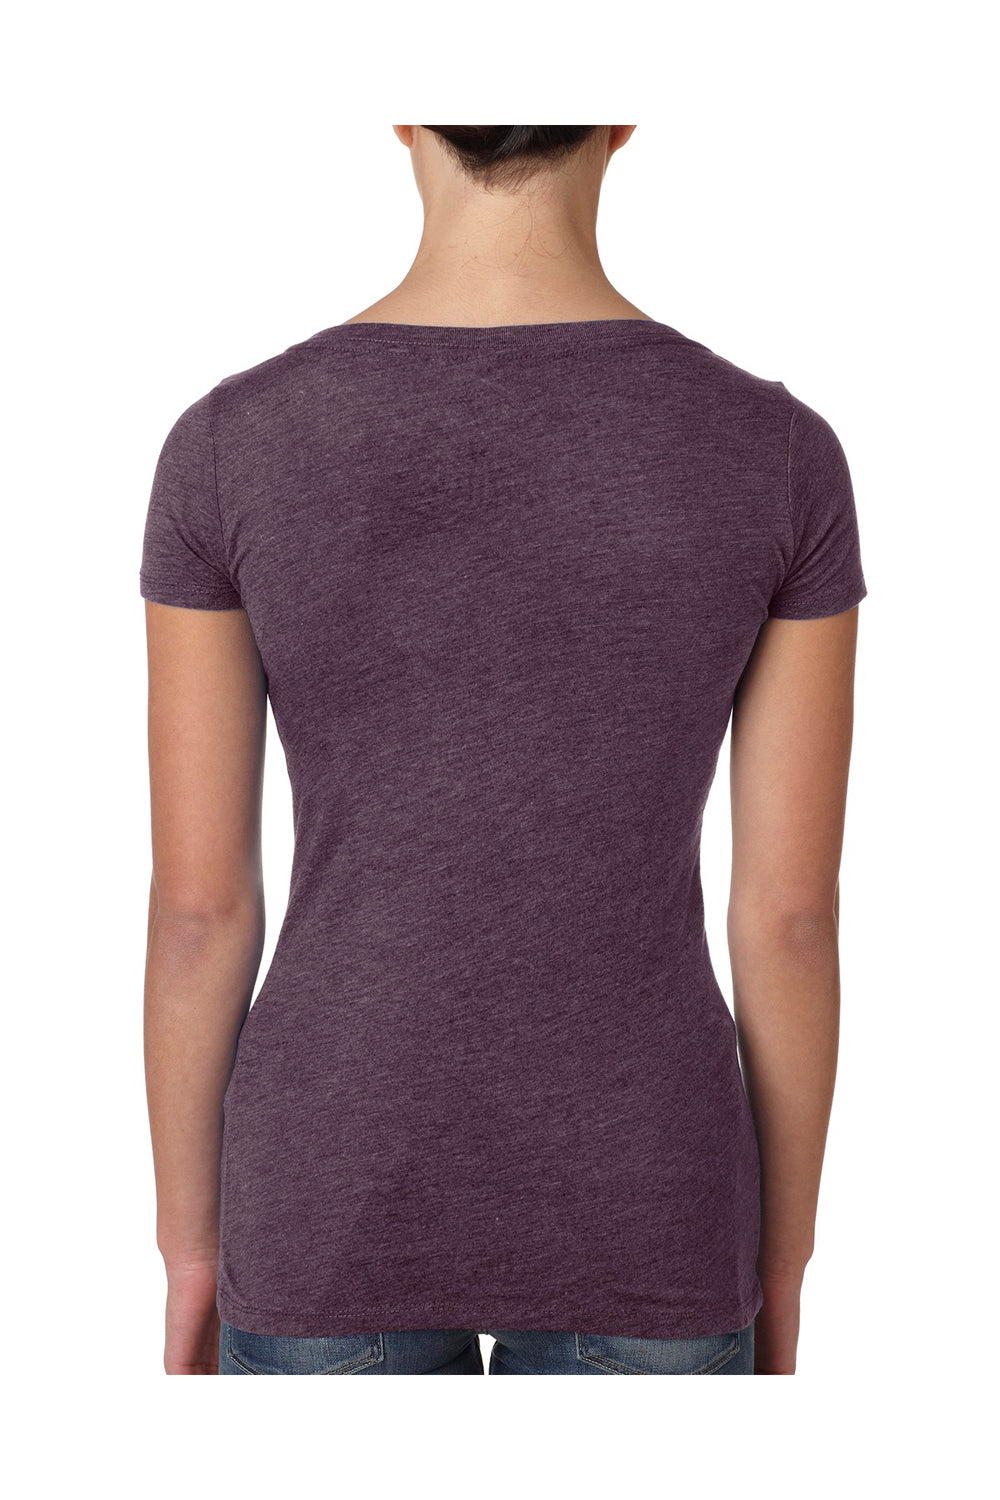 Next Level 6730 Womens Jersey Short Sleeve Scoop Neck T-Shirt Purple Back